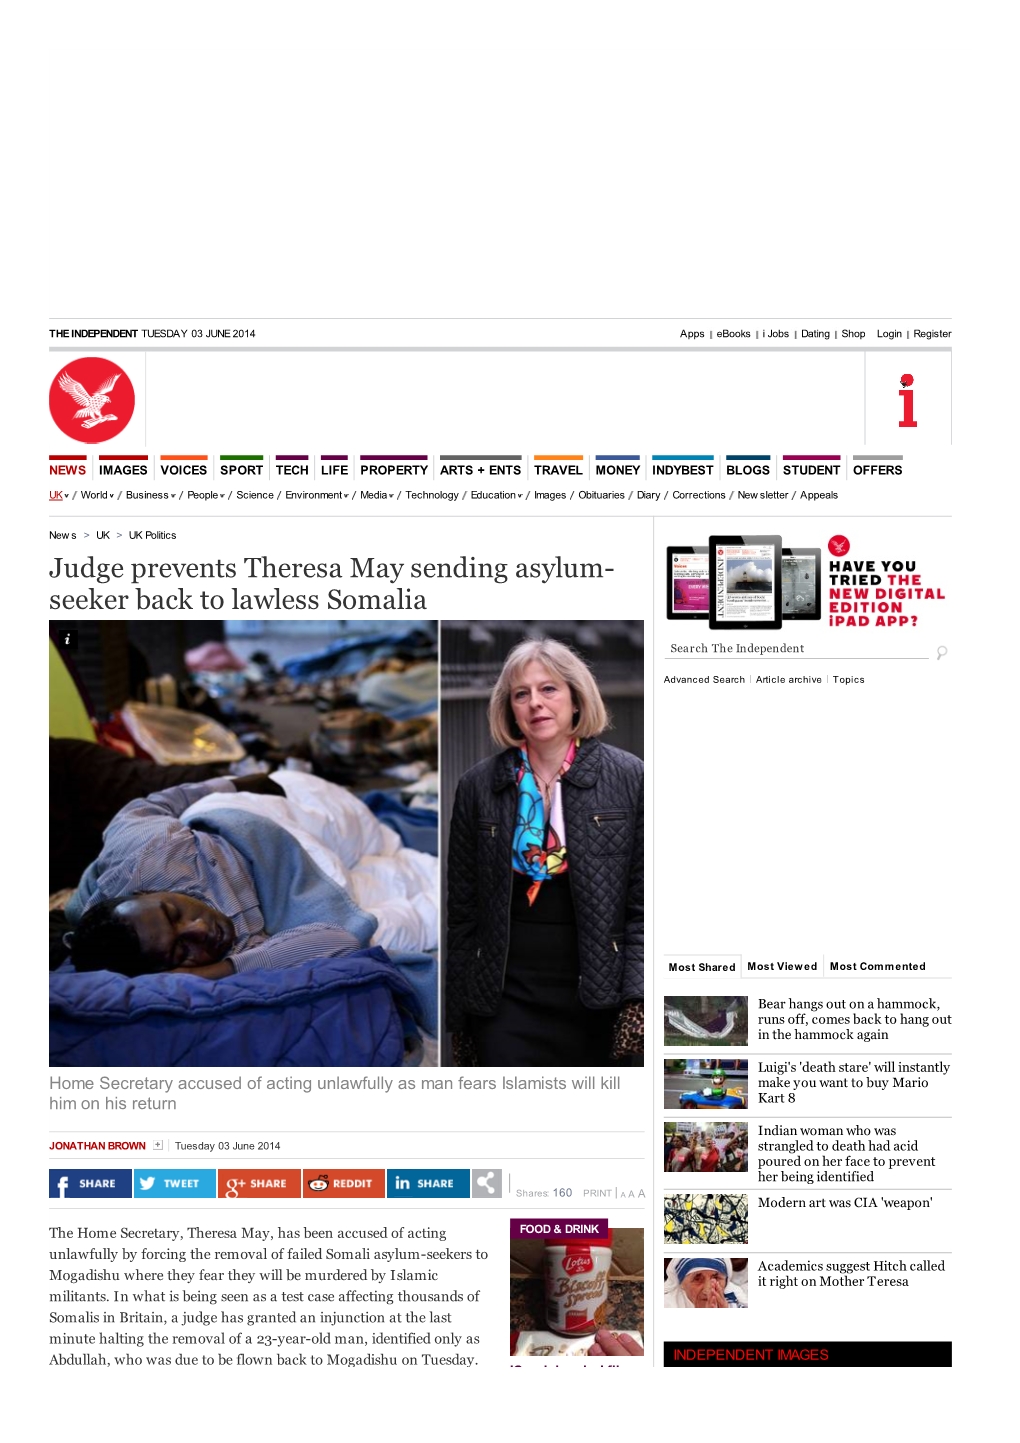 Judge Prevents Theresa May Sending Asylum-Seeker Back to Lawless